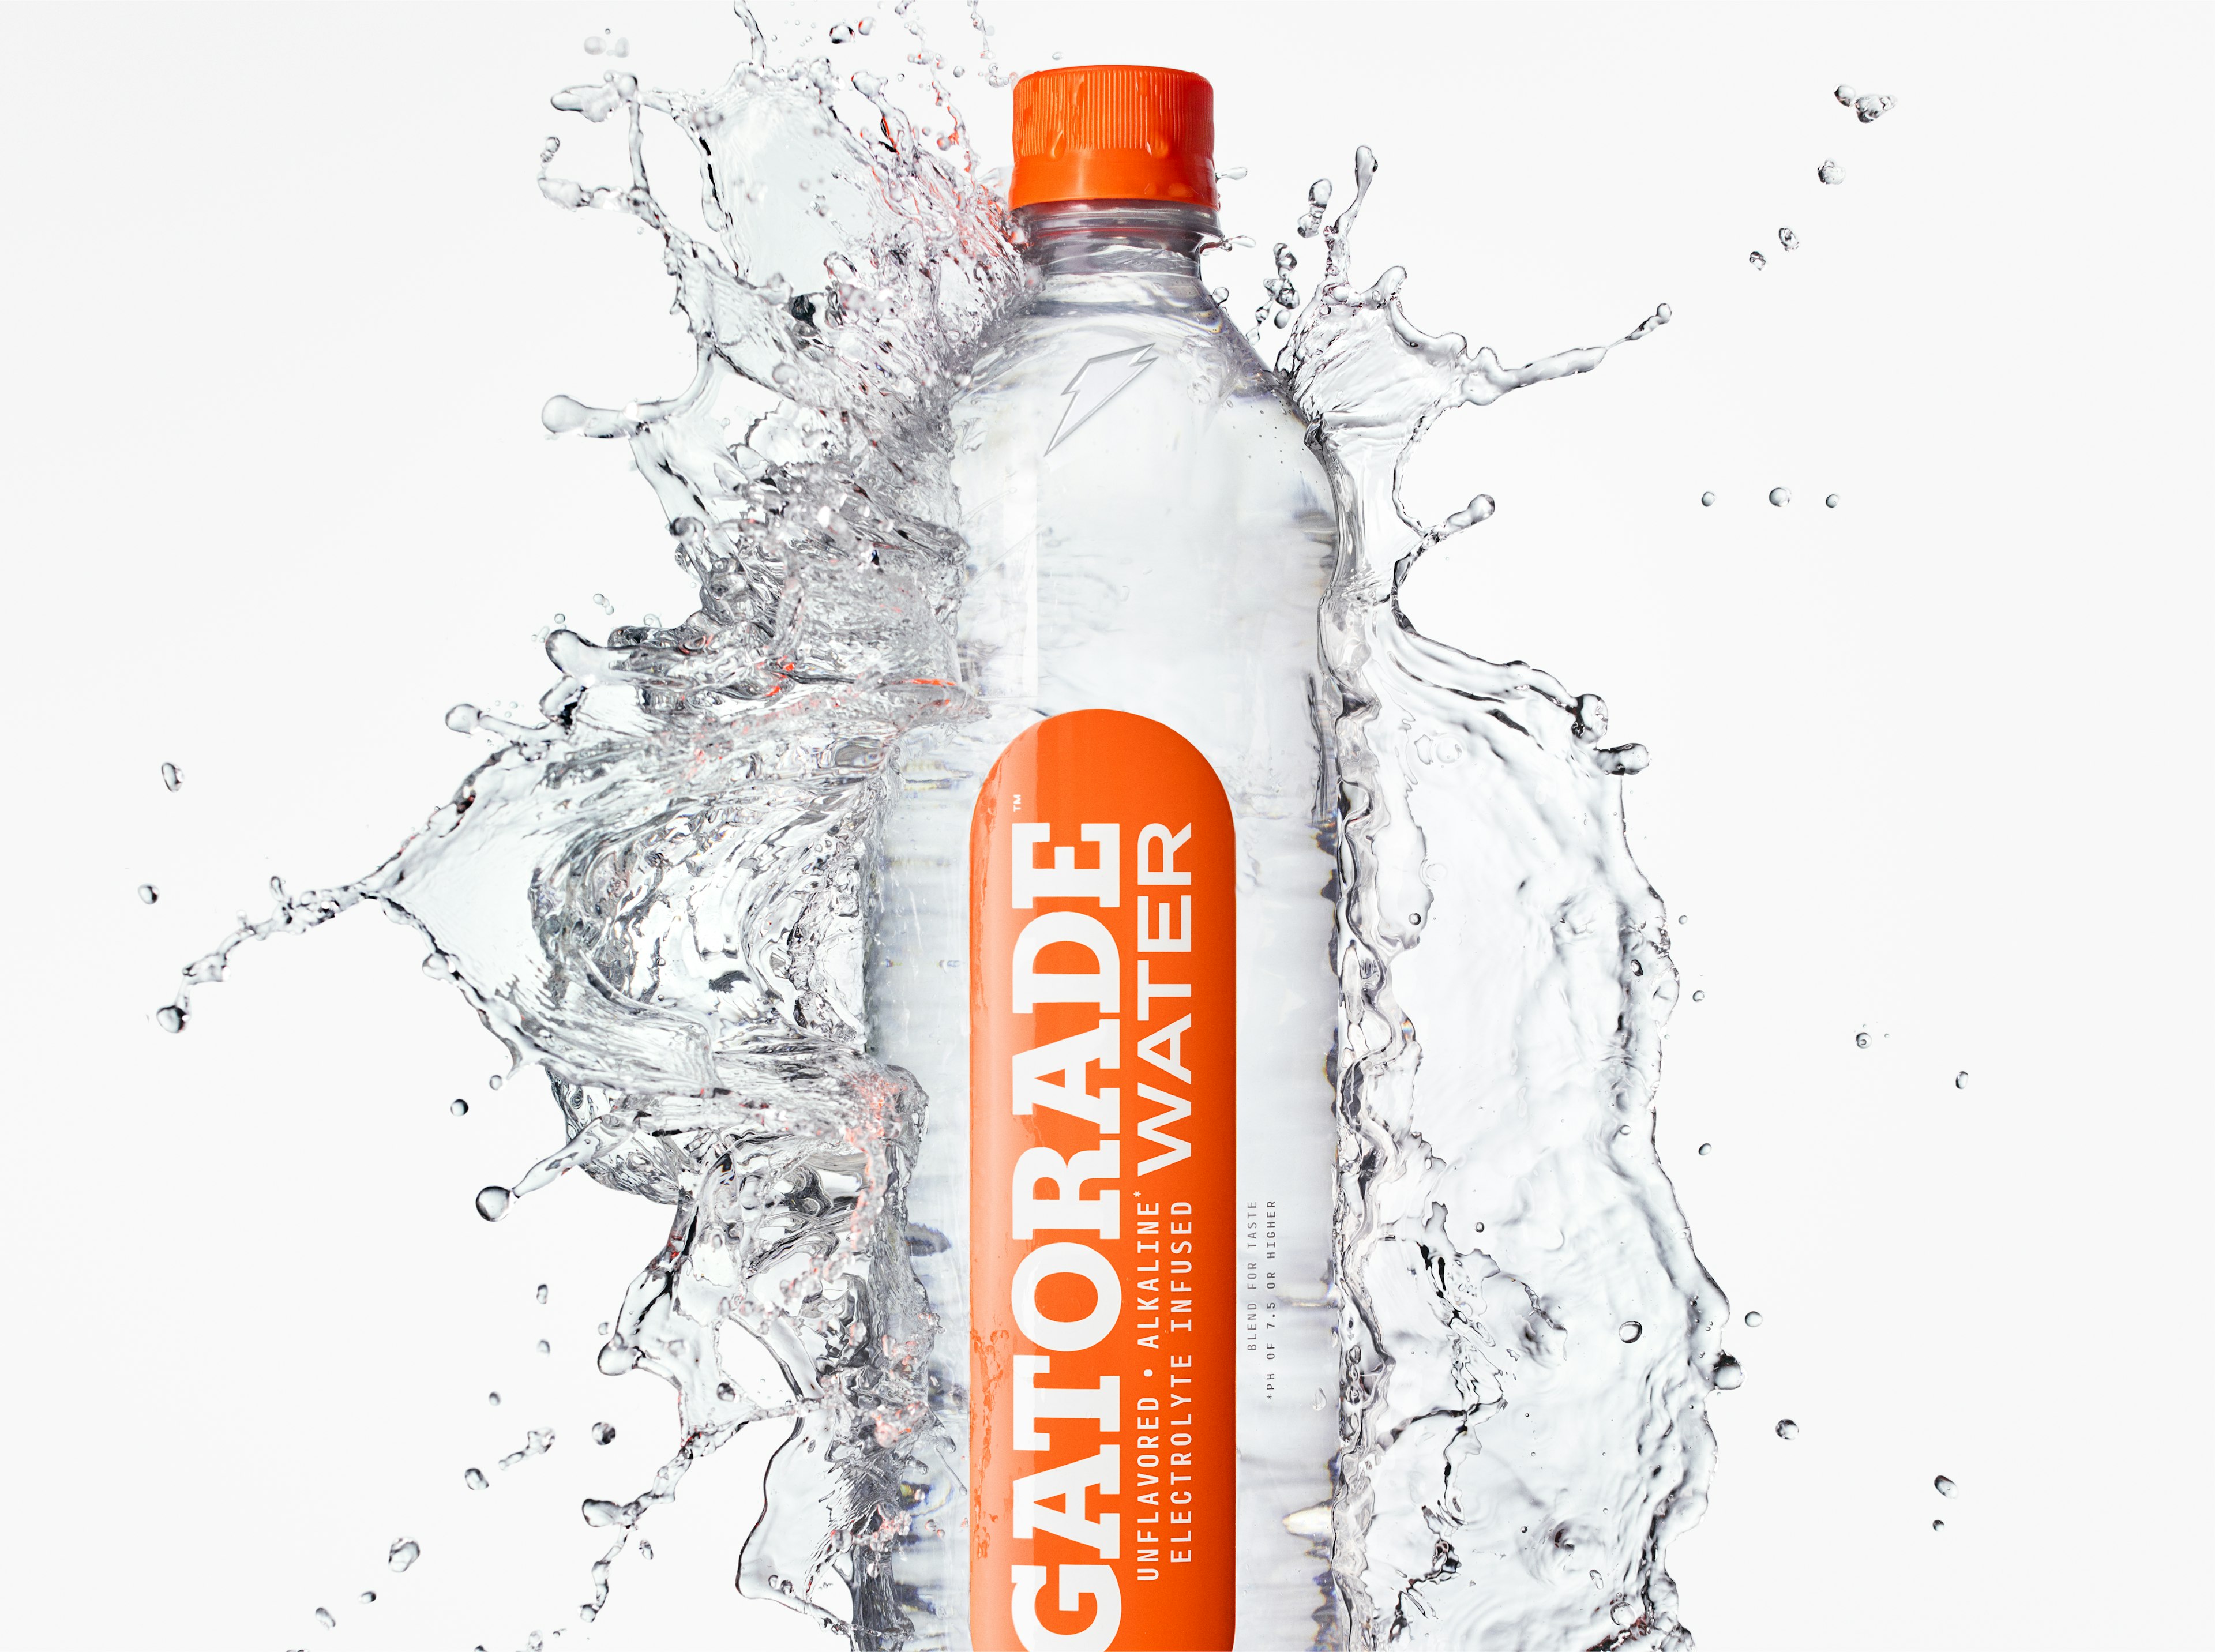 gatorade water bottle with splash of water